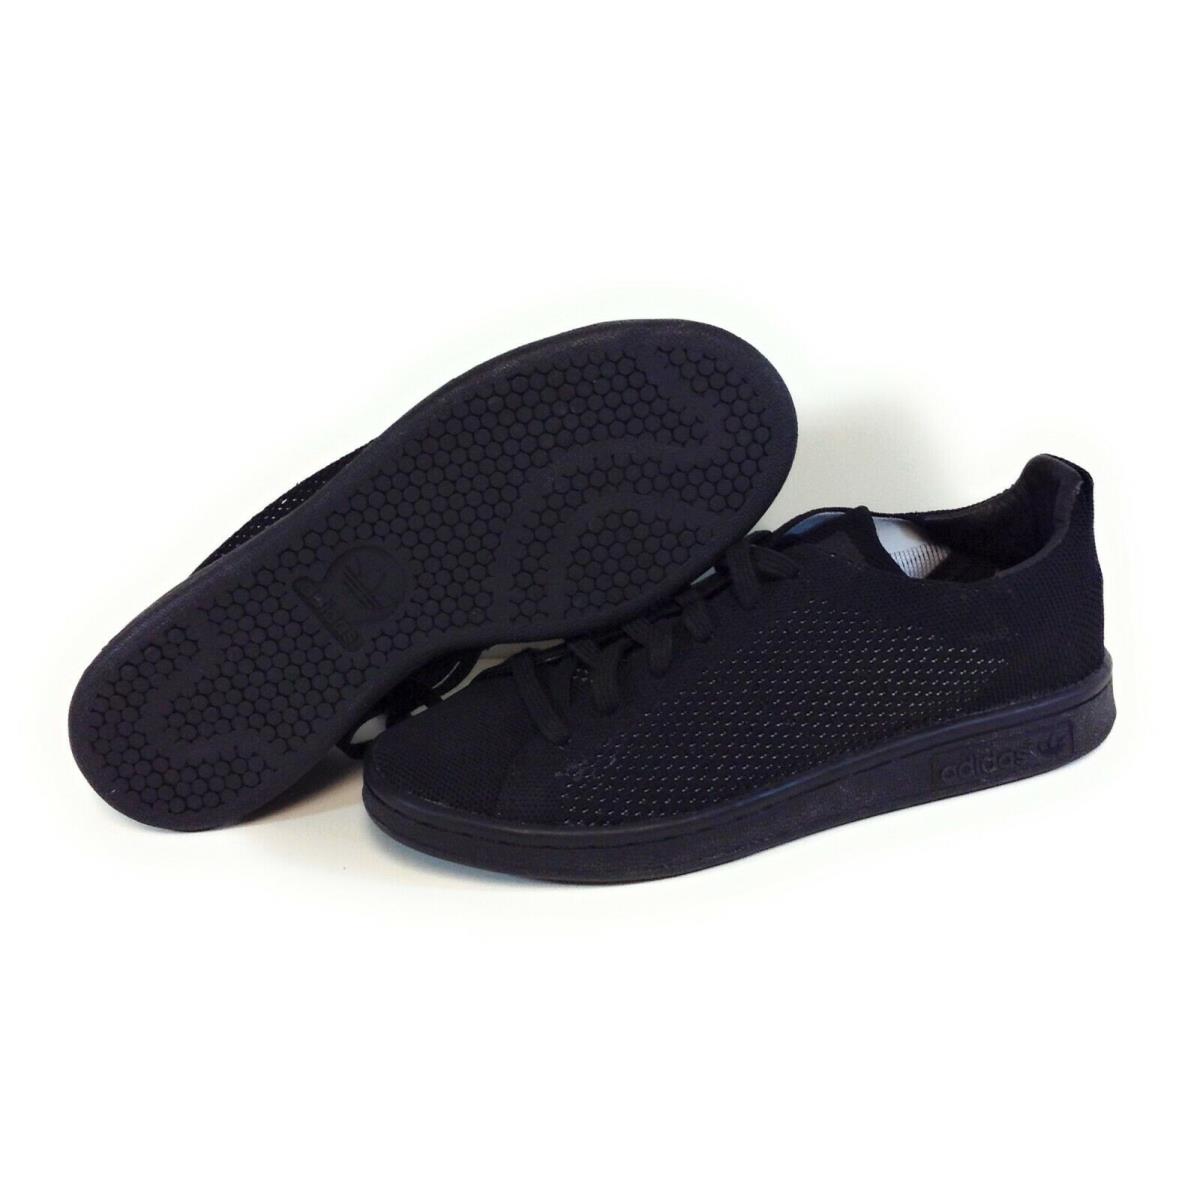 Youth Kids Boys Girls Adidas Stan Smith Primeknit S80065 Black Sneakers Shoes - Black